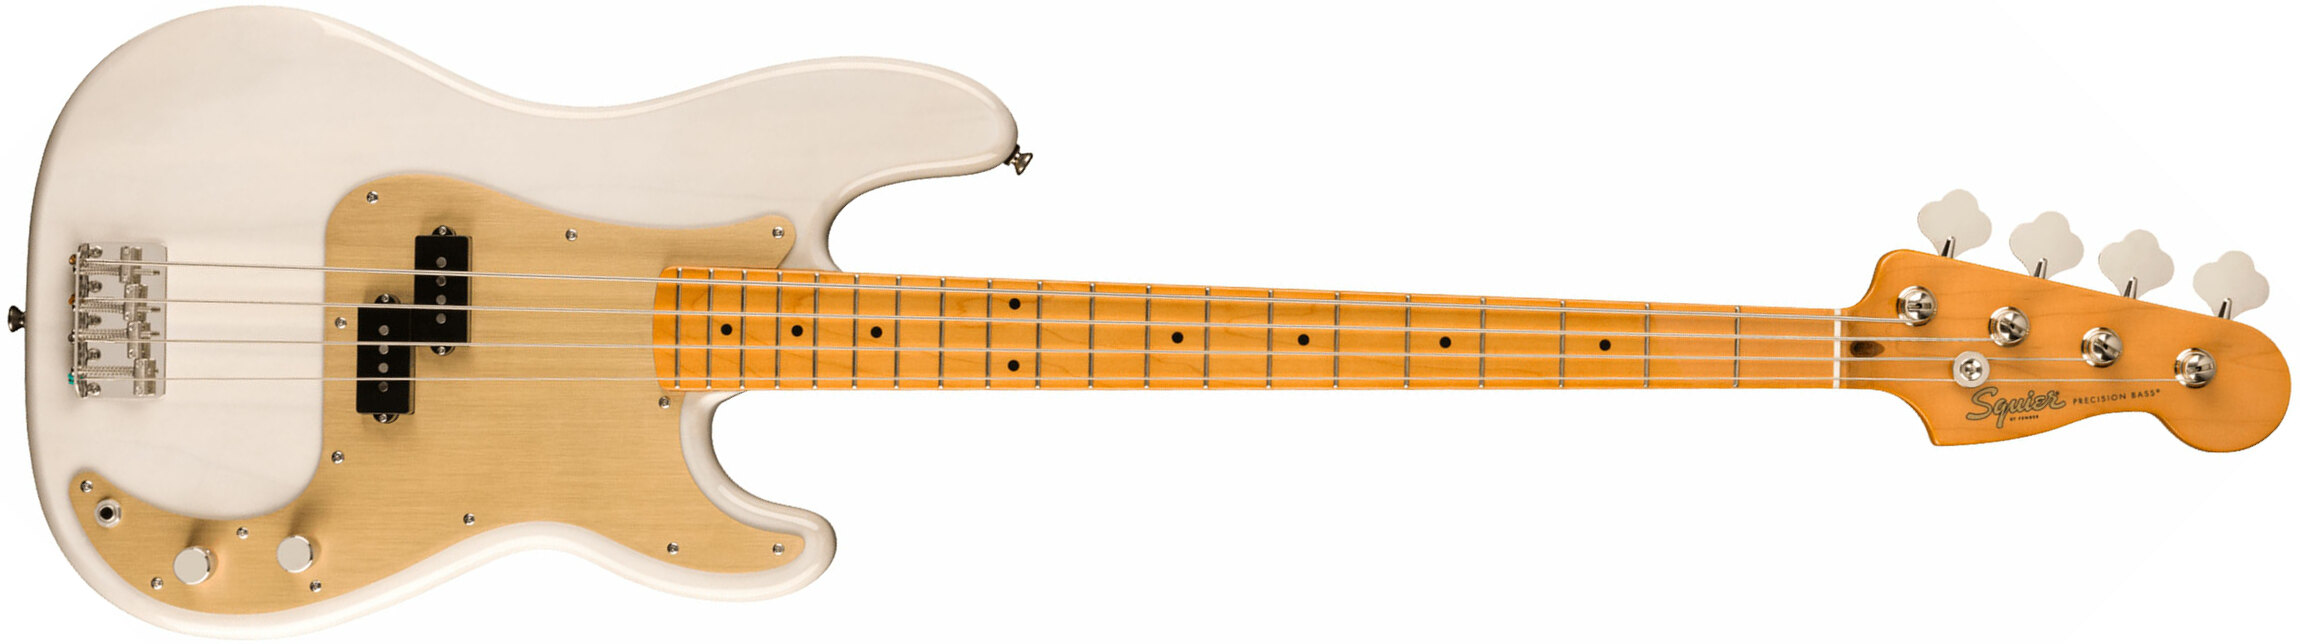 Squier Precision Bass Late '50s Classic Vibe Fsr Ltd Mn - White Blonde - Basse Électrique Solid Body - Main picture